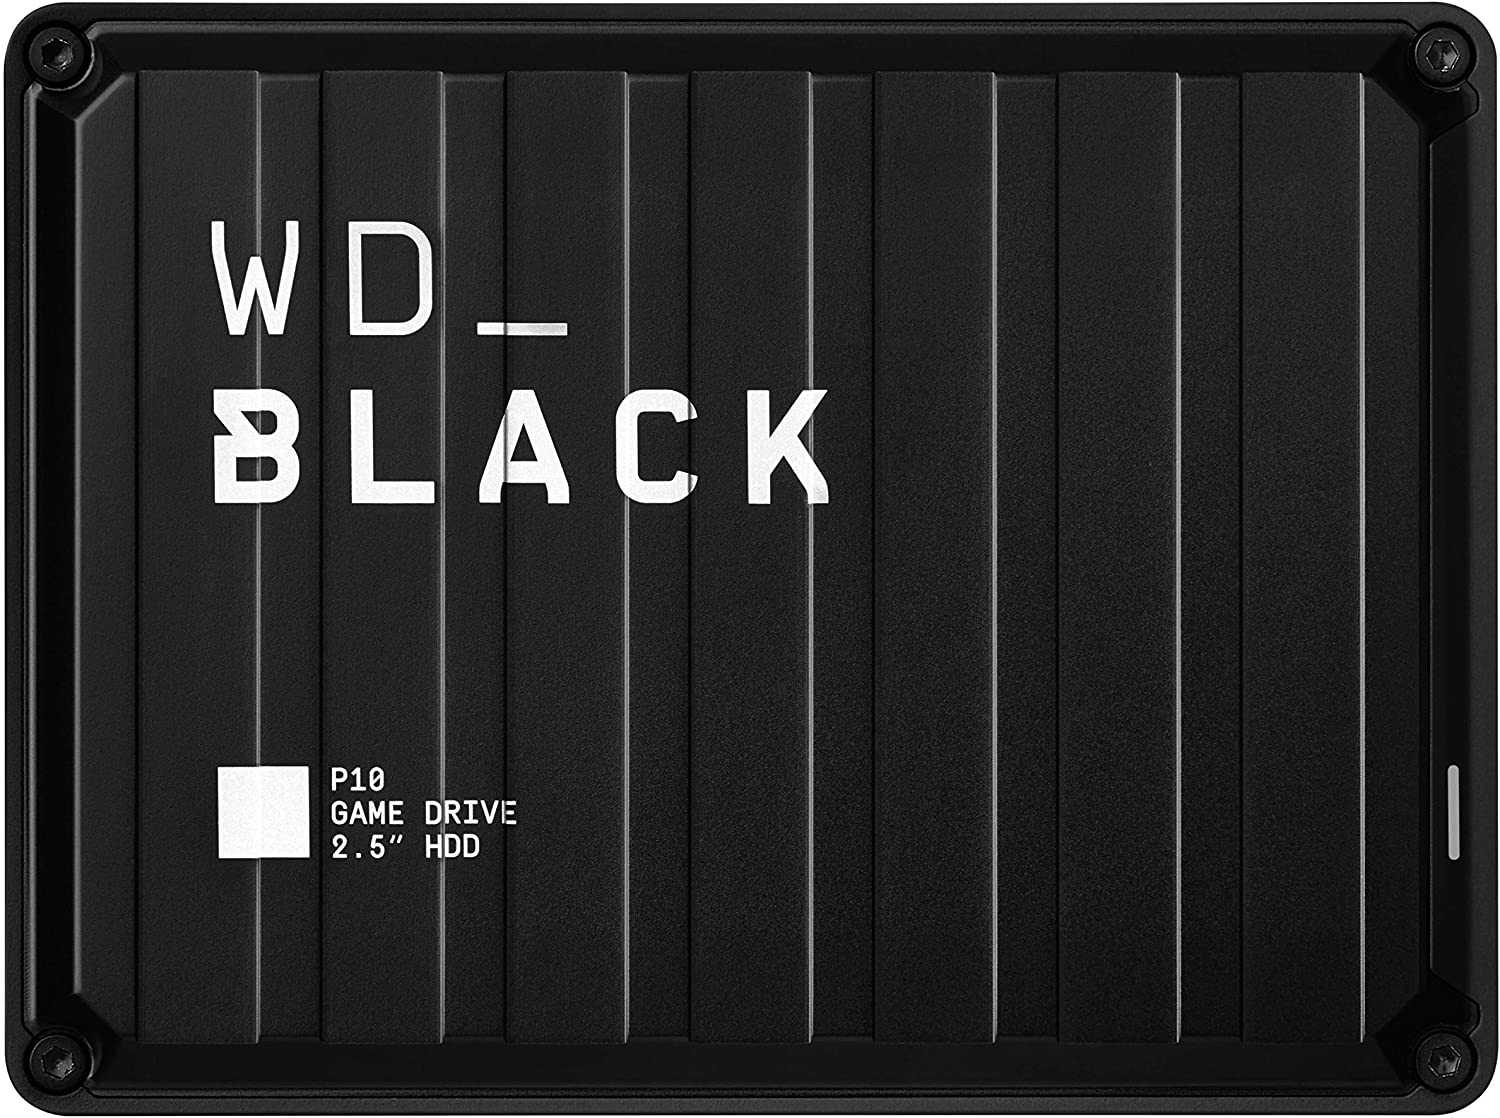 WD Black 5TB P10 Game Drive $99 at Newegg